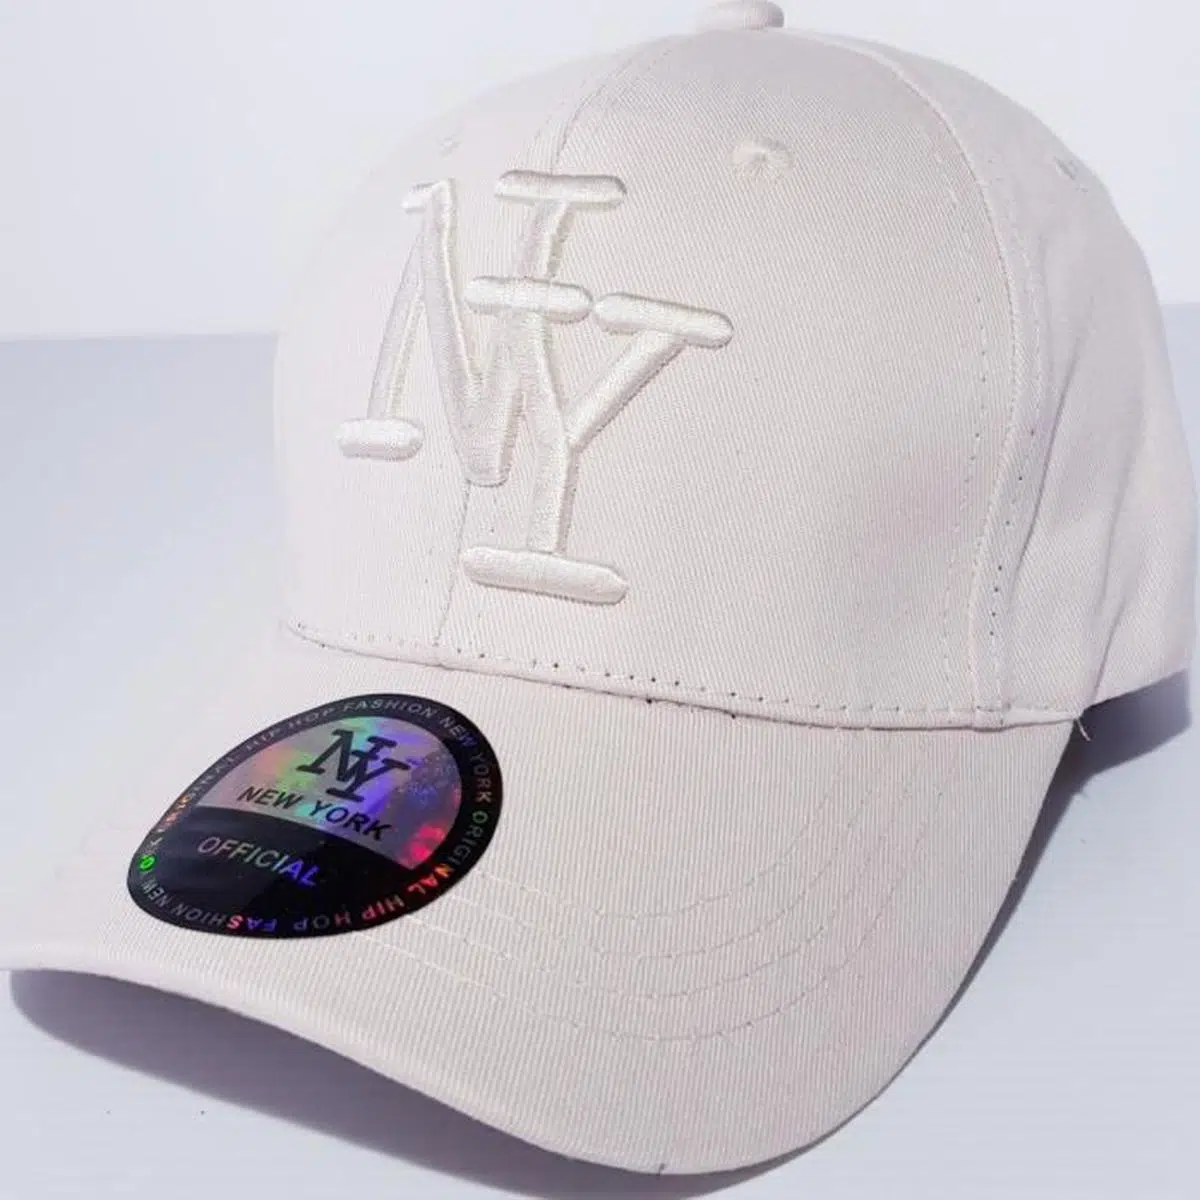 Une casquette de baseball de la marque NY